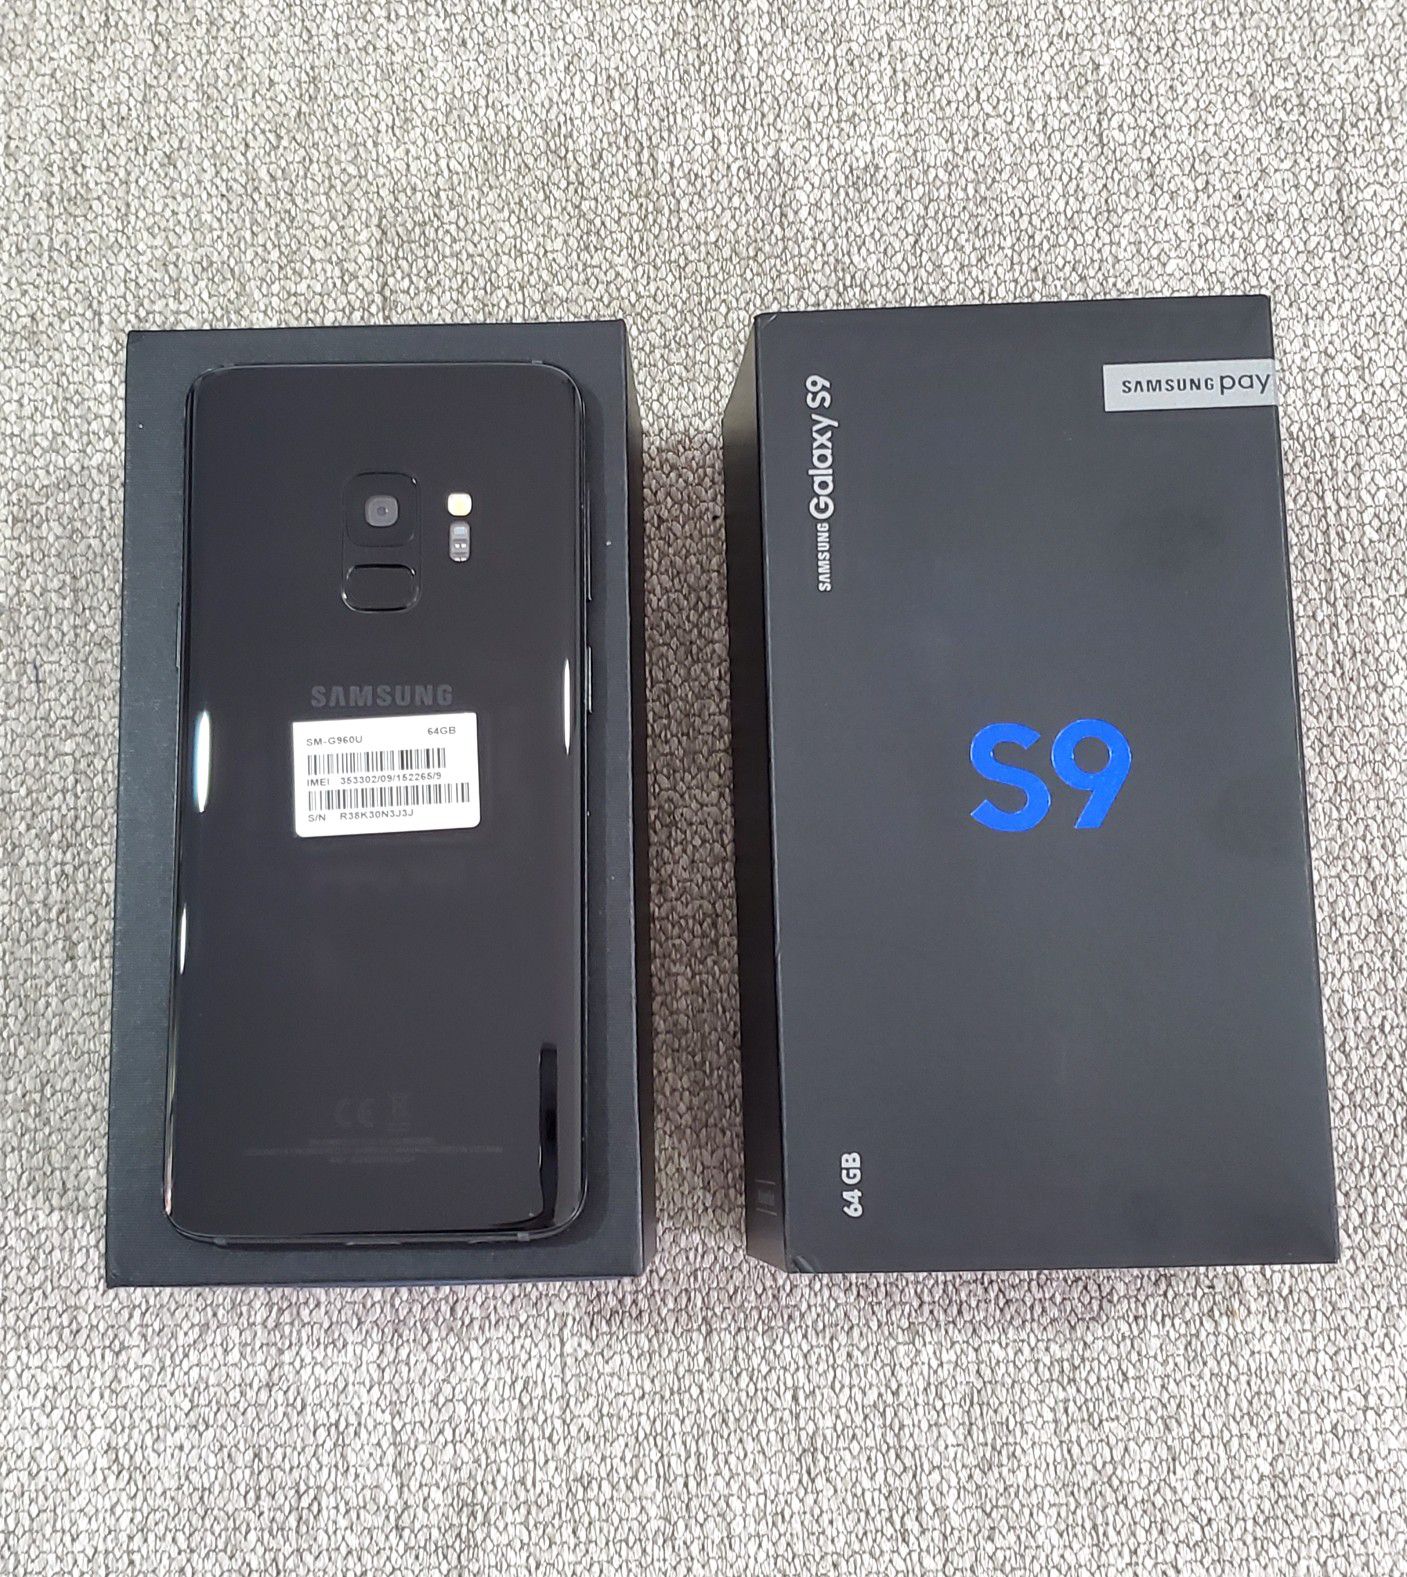 SAMSUNG GALAXY S9 64GB - FACTORY UNLOCKED - BRAND NEW SEALED IN BOX